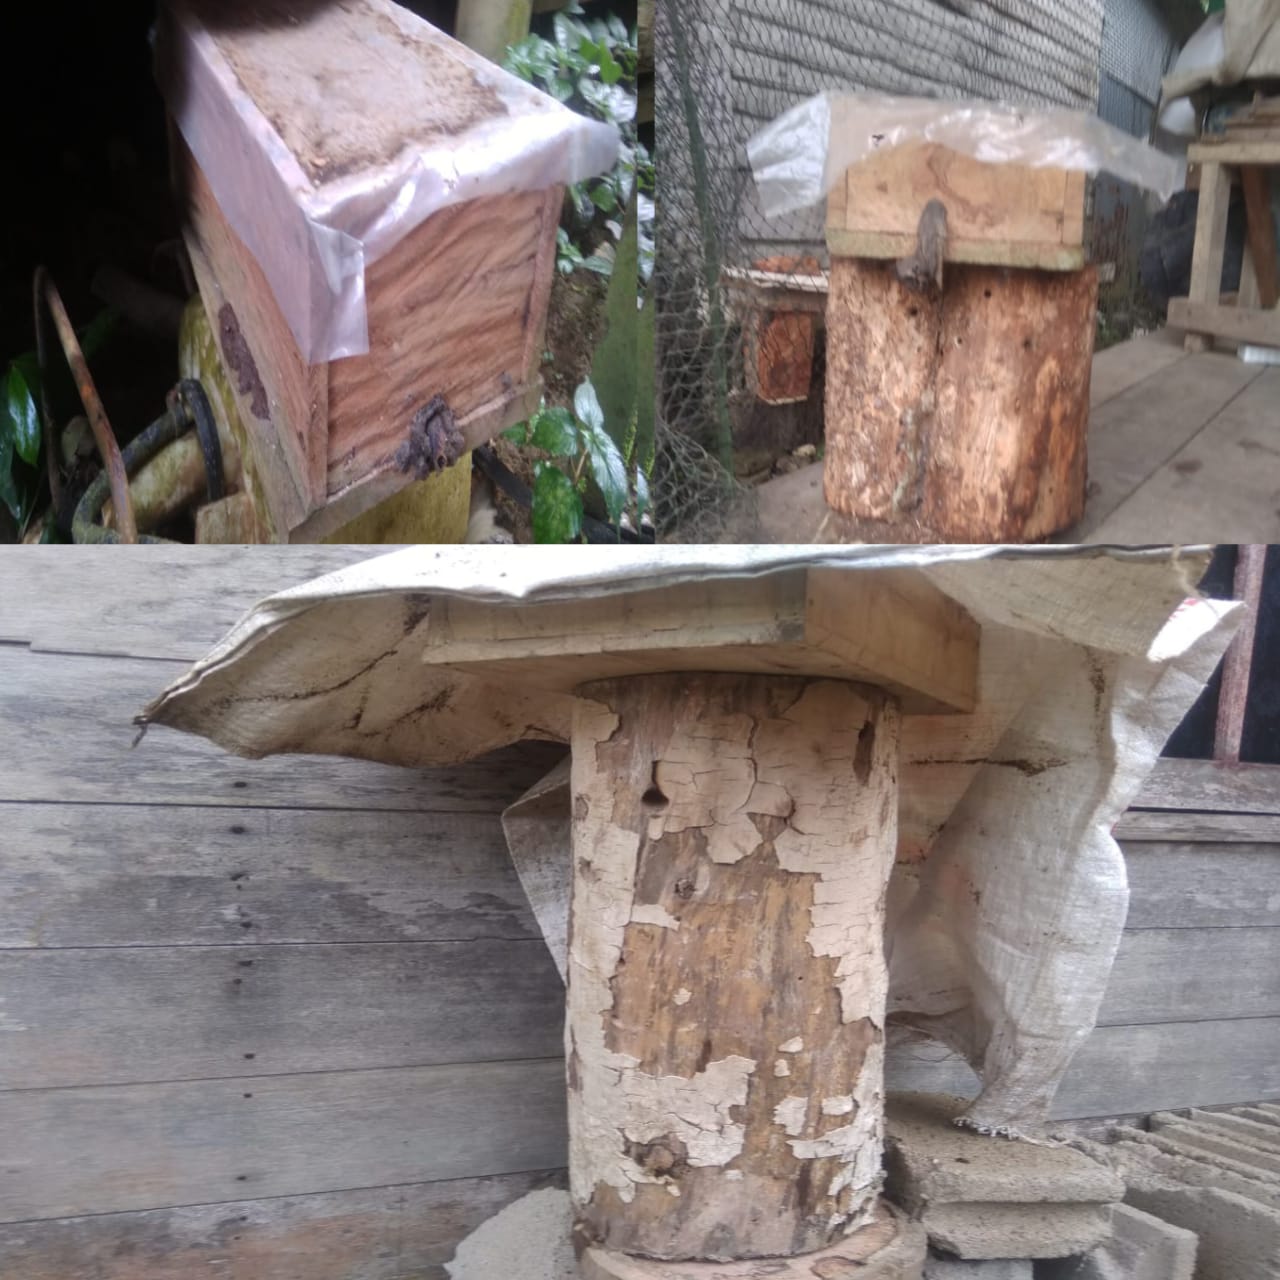 Tiga sarang madu kelulut yang dicuri pelaku saat ini disita polisi sebagai barang bukti. (Foto: Humas Polres Tabalong)